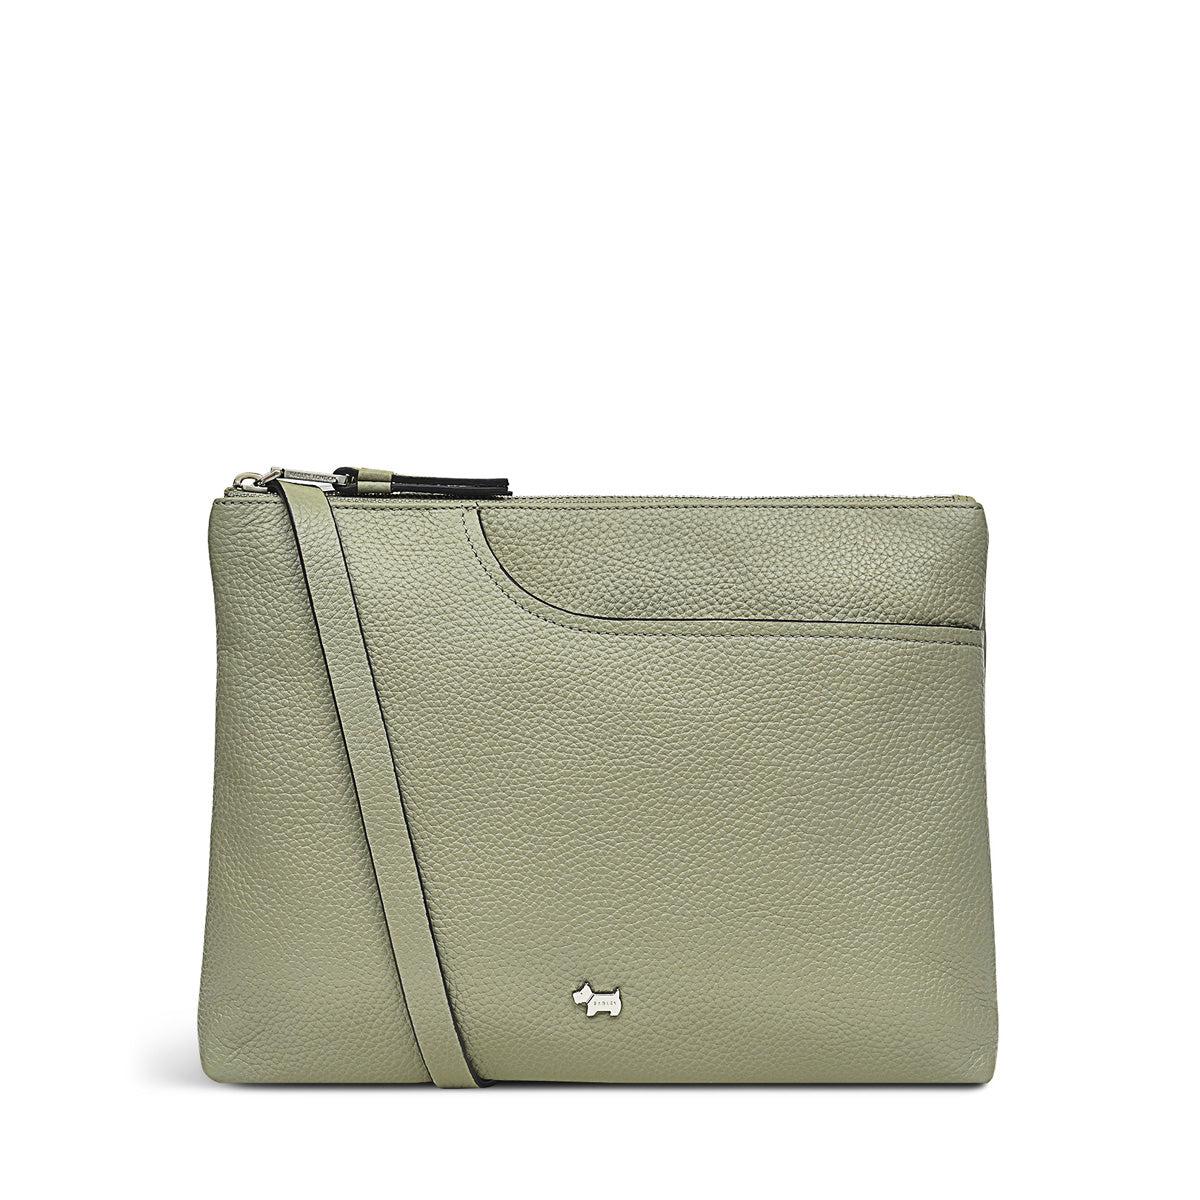 RADLEY London Sunny Dene Women's Leather Shoulder Bag- Medium Size Purse -  Women's Shoulder Handbag: Handbags: Amazon.com